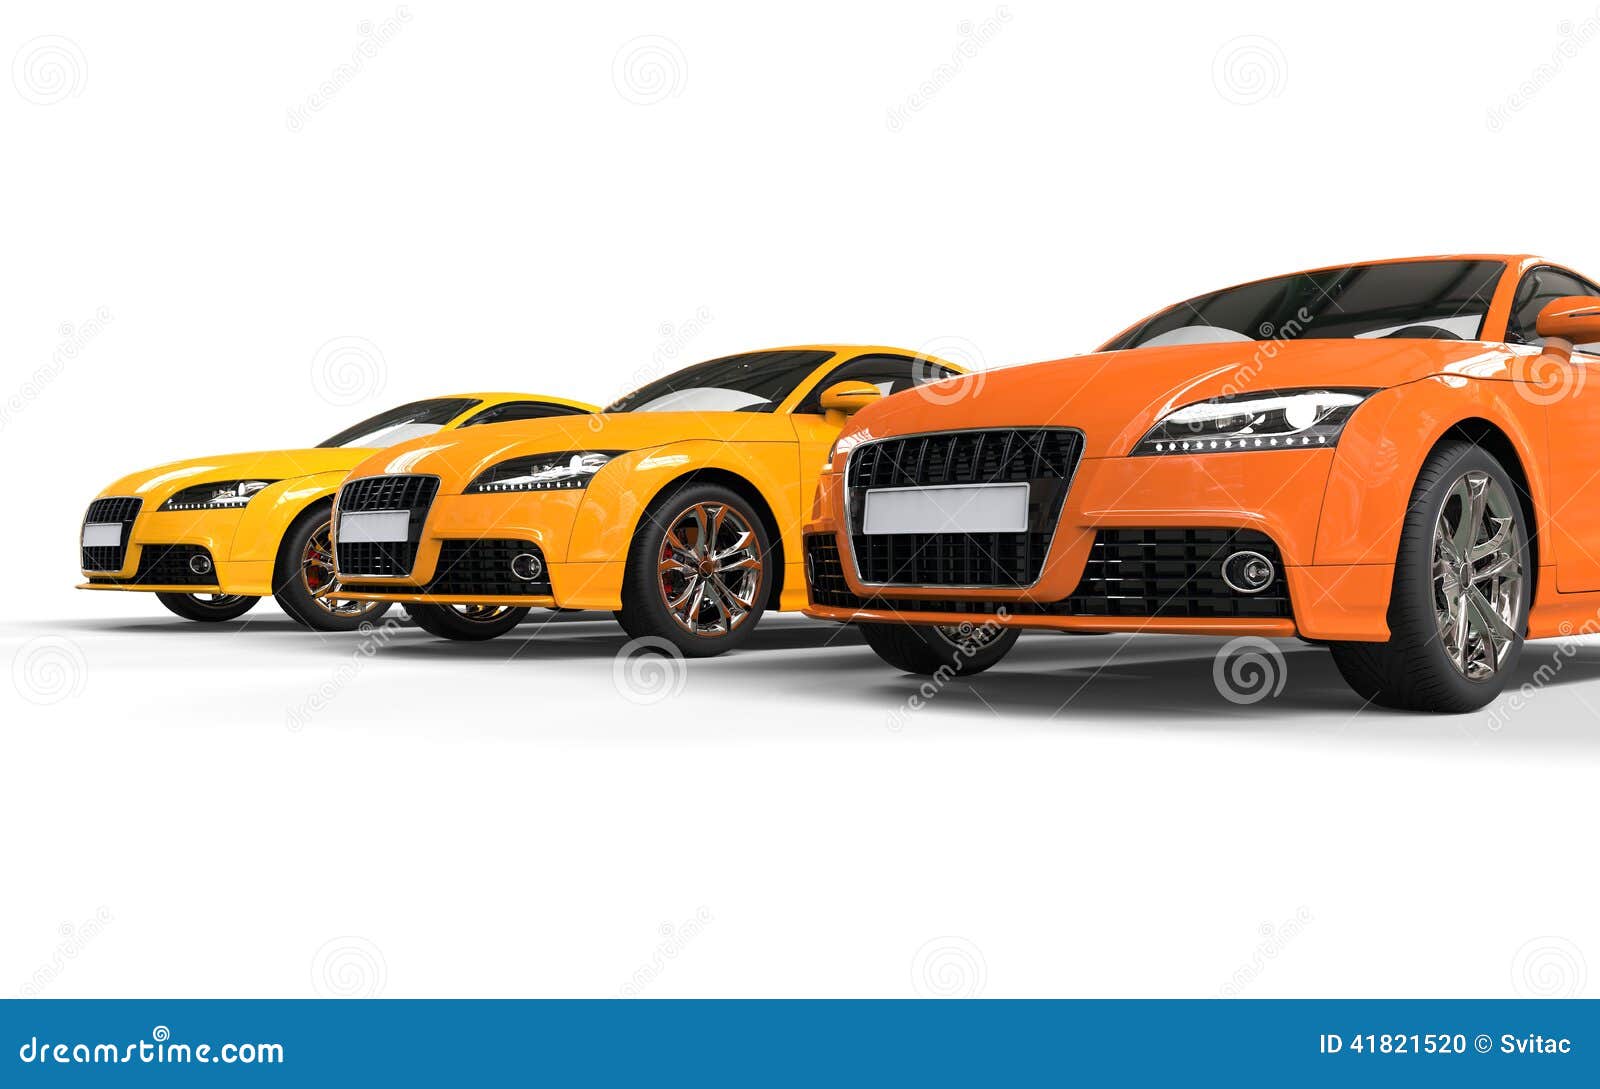 Orange fast cars stock illustration. Illustration of background - 41821520